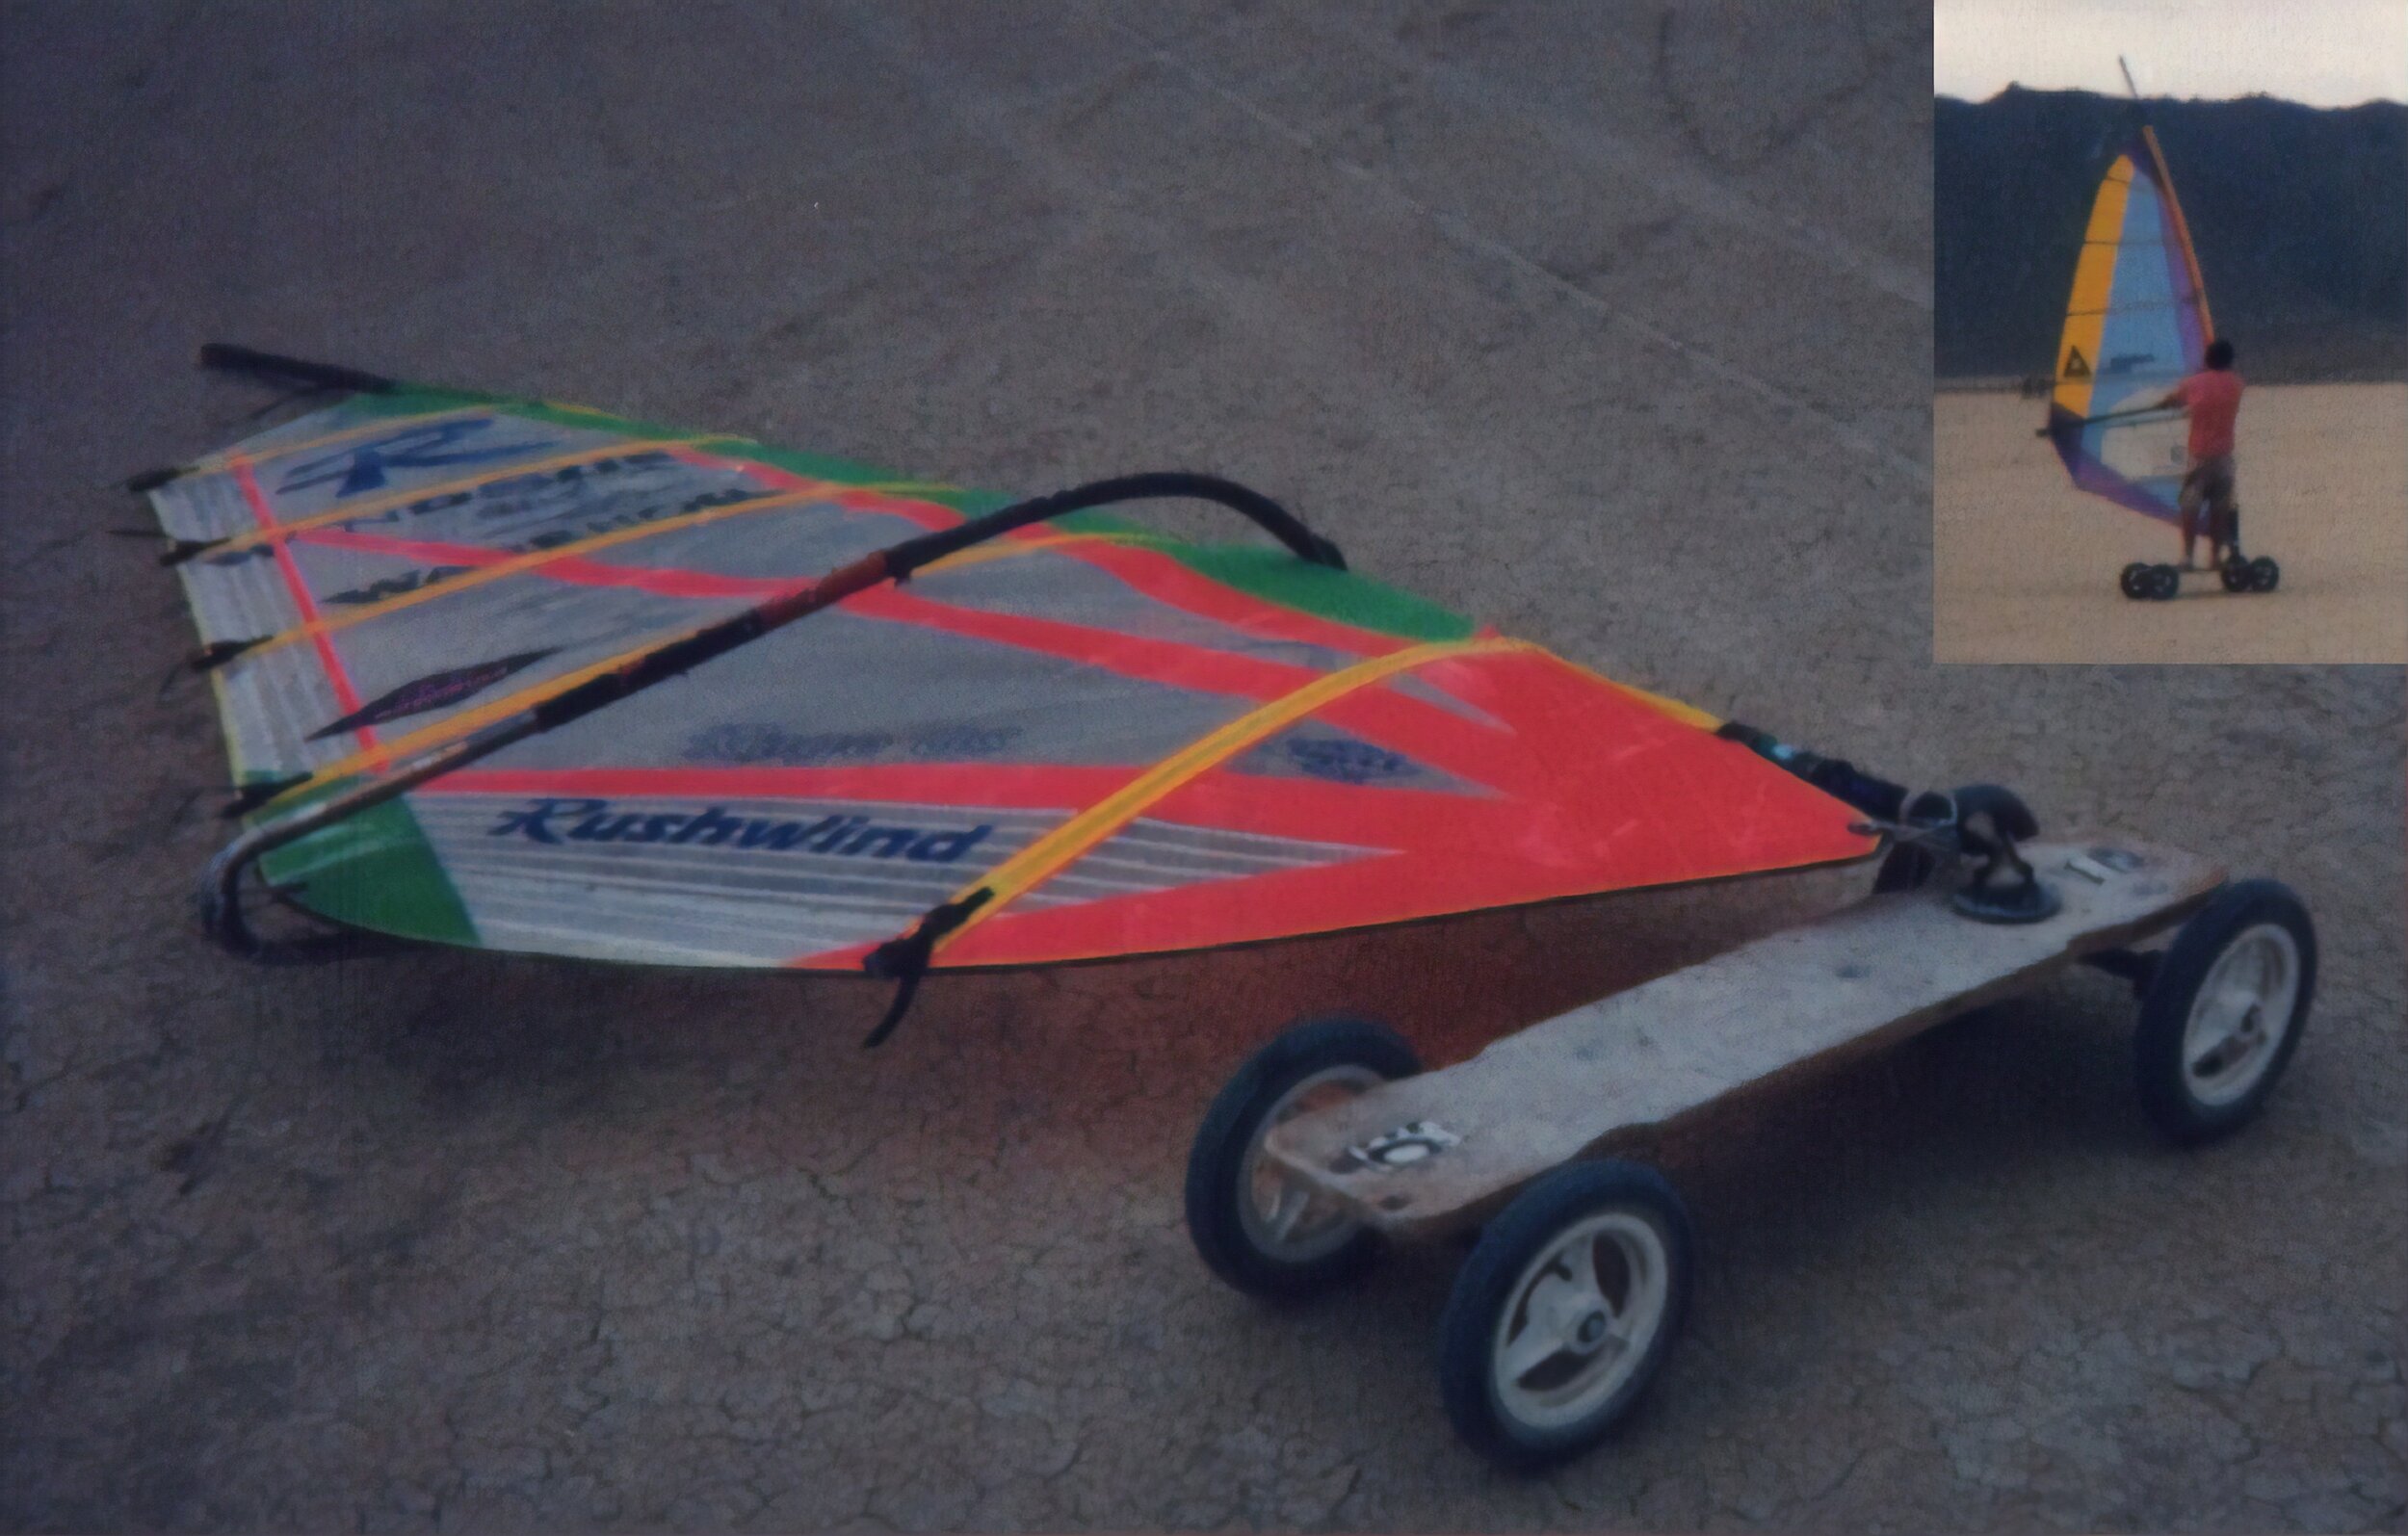  A standard windsurfer sail mounted on a skate board. 